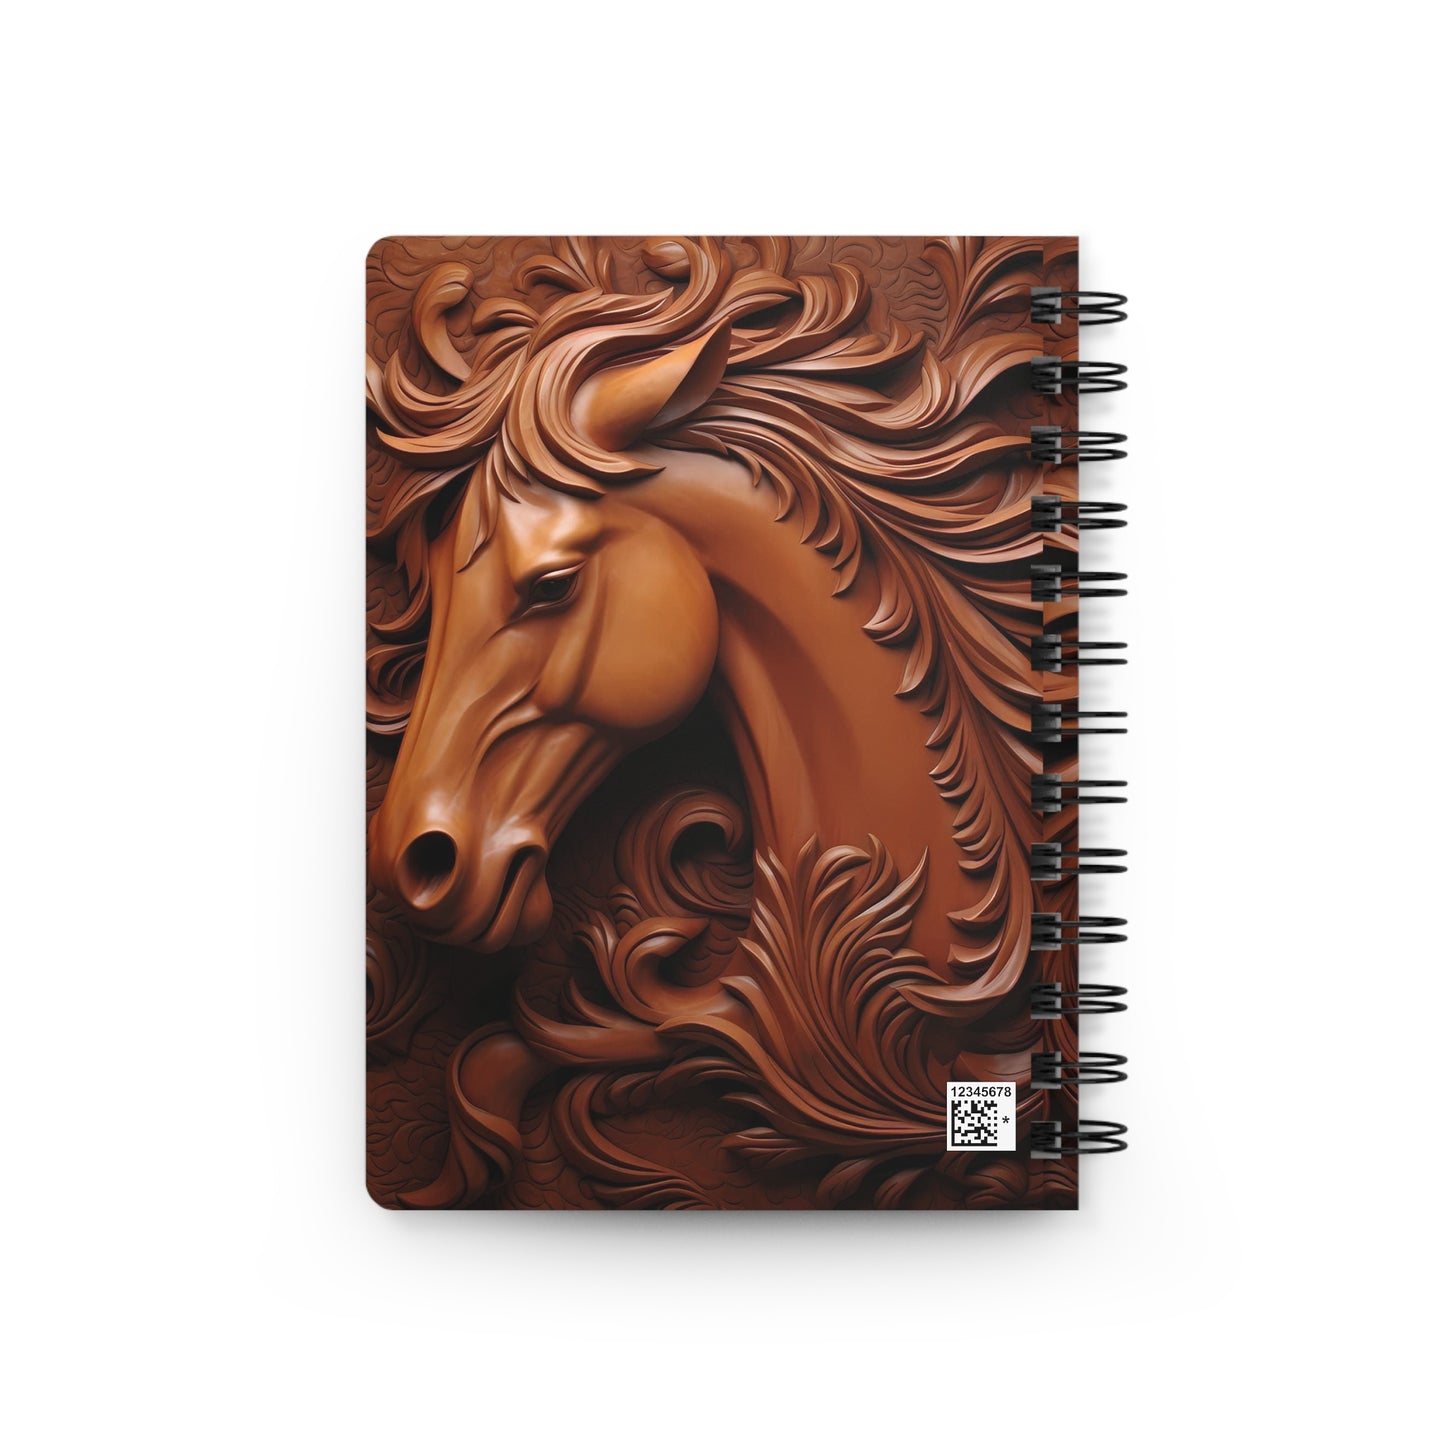 Leather Horse Spiral Bound Journal